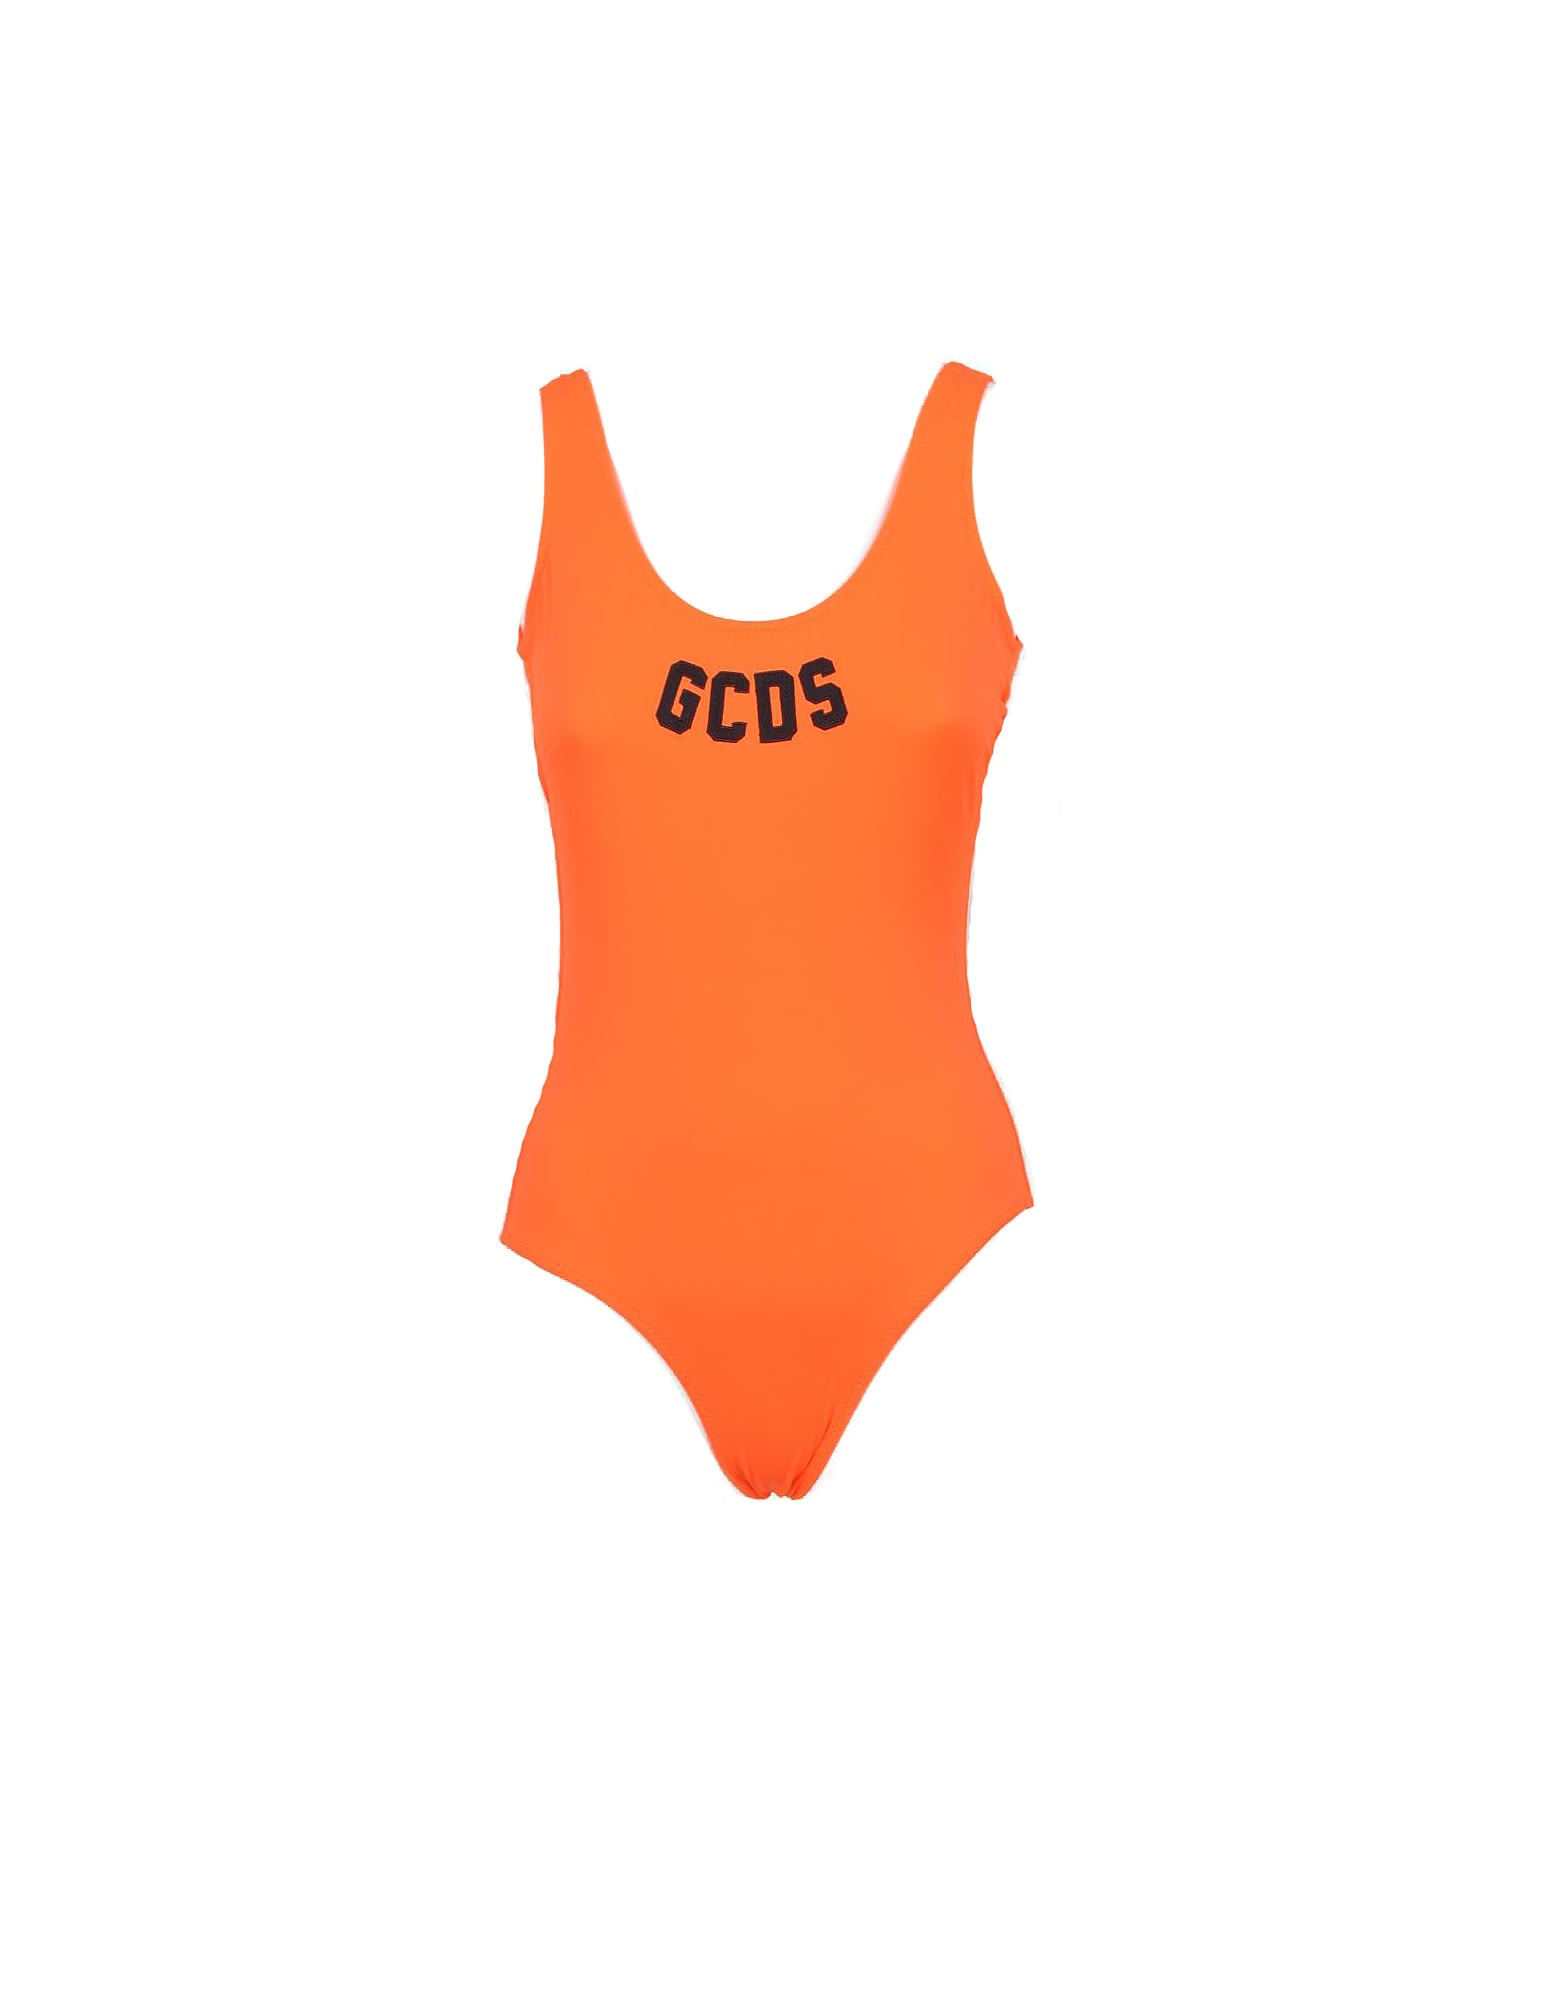 Gcds Womens Orange Swimsuit